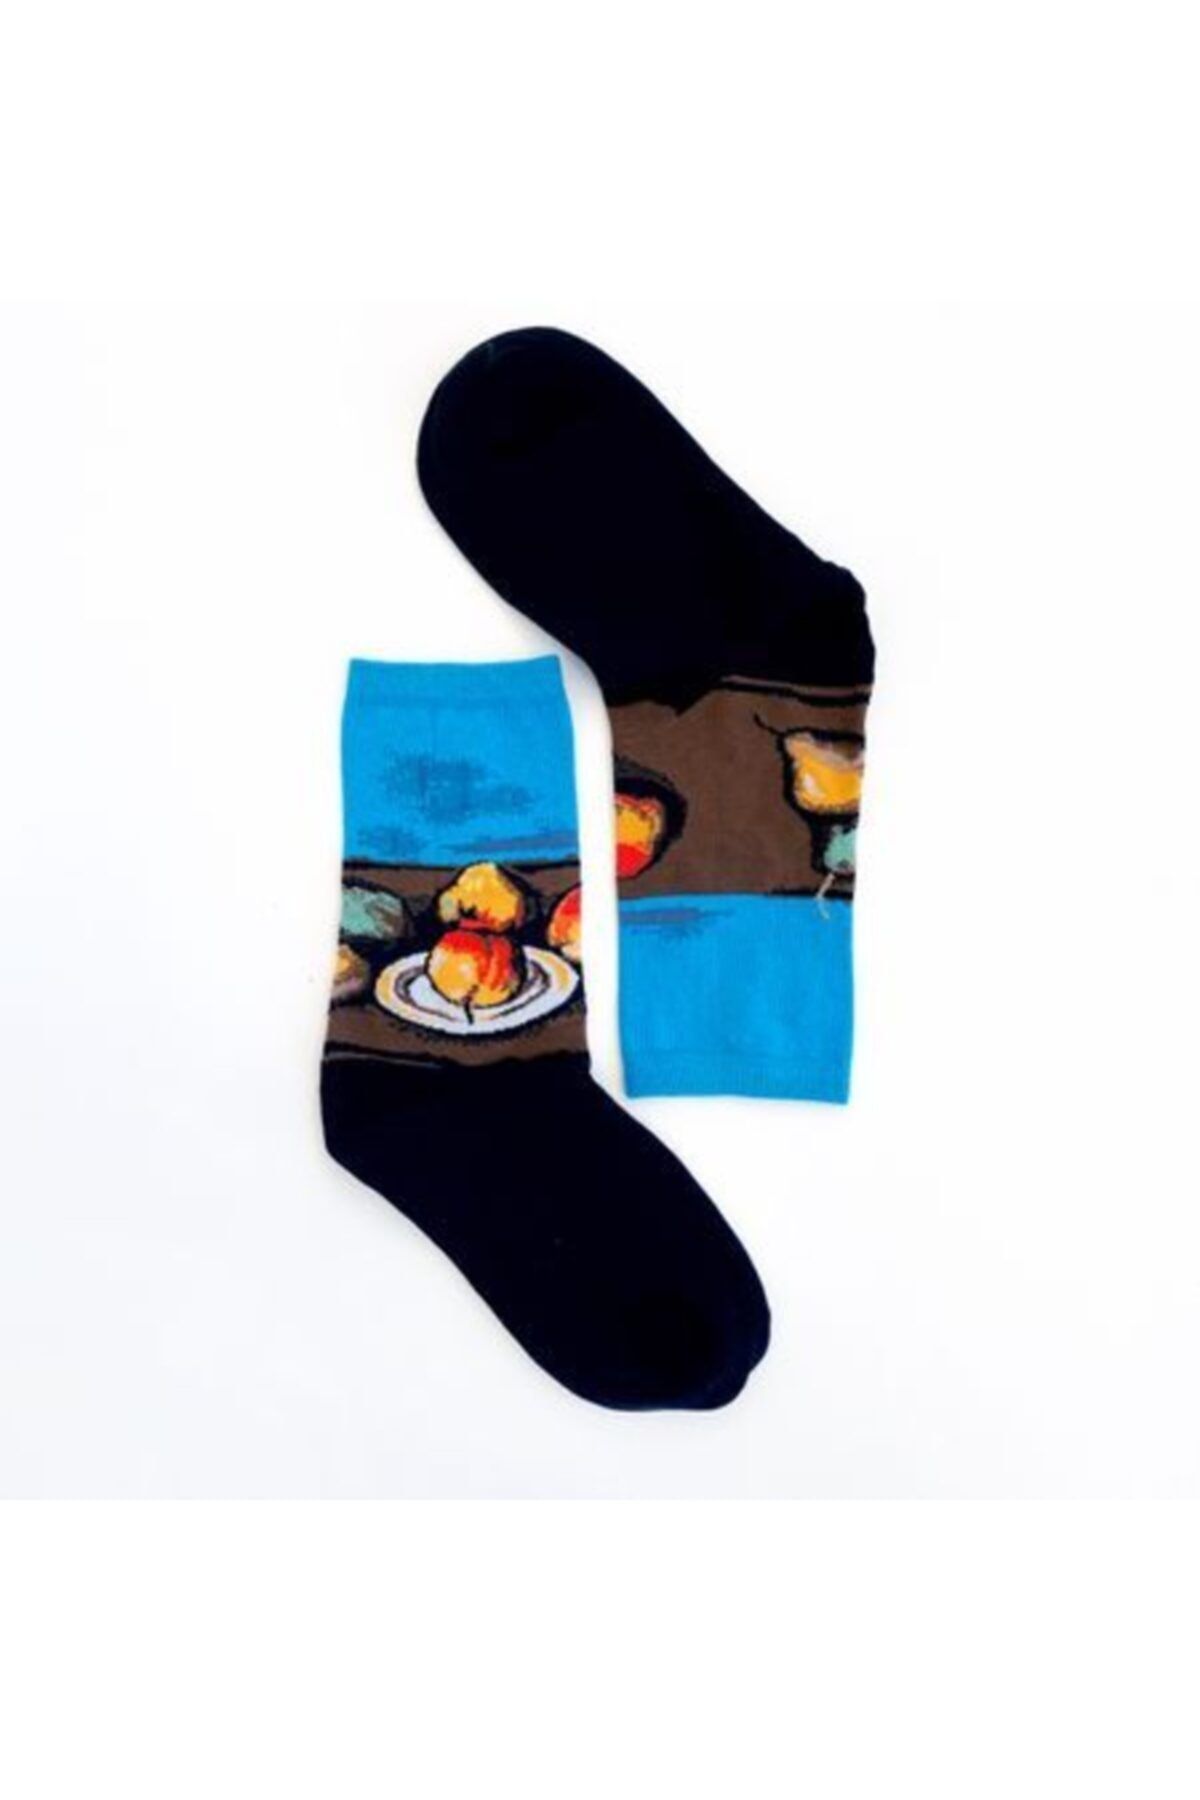 Bikutumutluluk Hediyelik - N362 - Tablo Serisi - Mavi Still Life Plate And Fruits Çorap